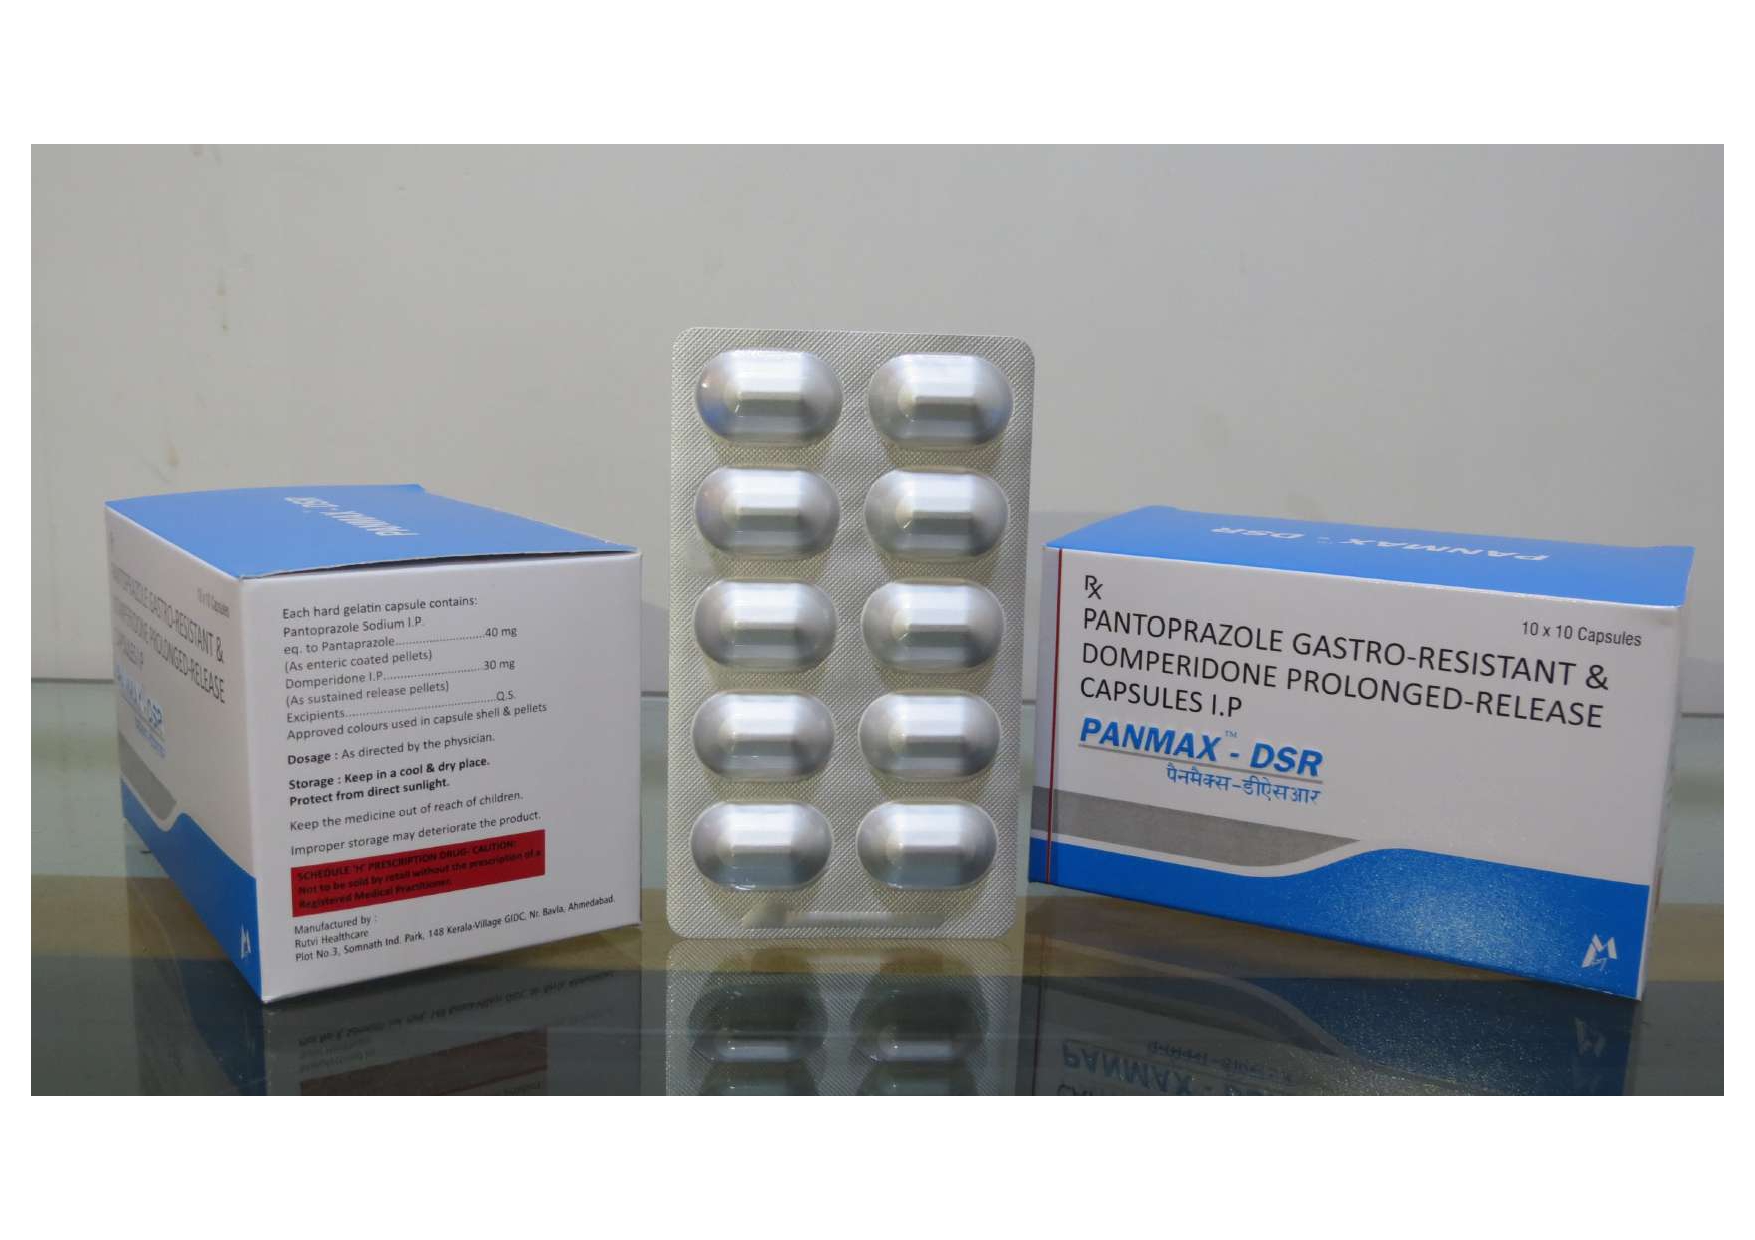 pantoprazole sodium sequihydrate (eq.to
pantoprazole) 40mg +domperidone bp 30mg sustained released capsules